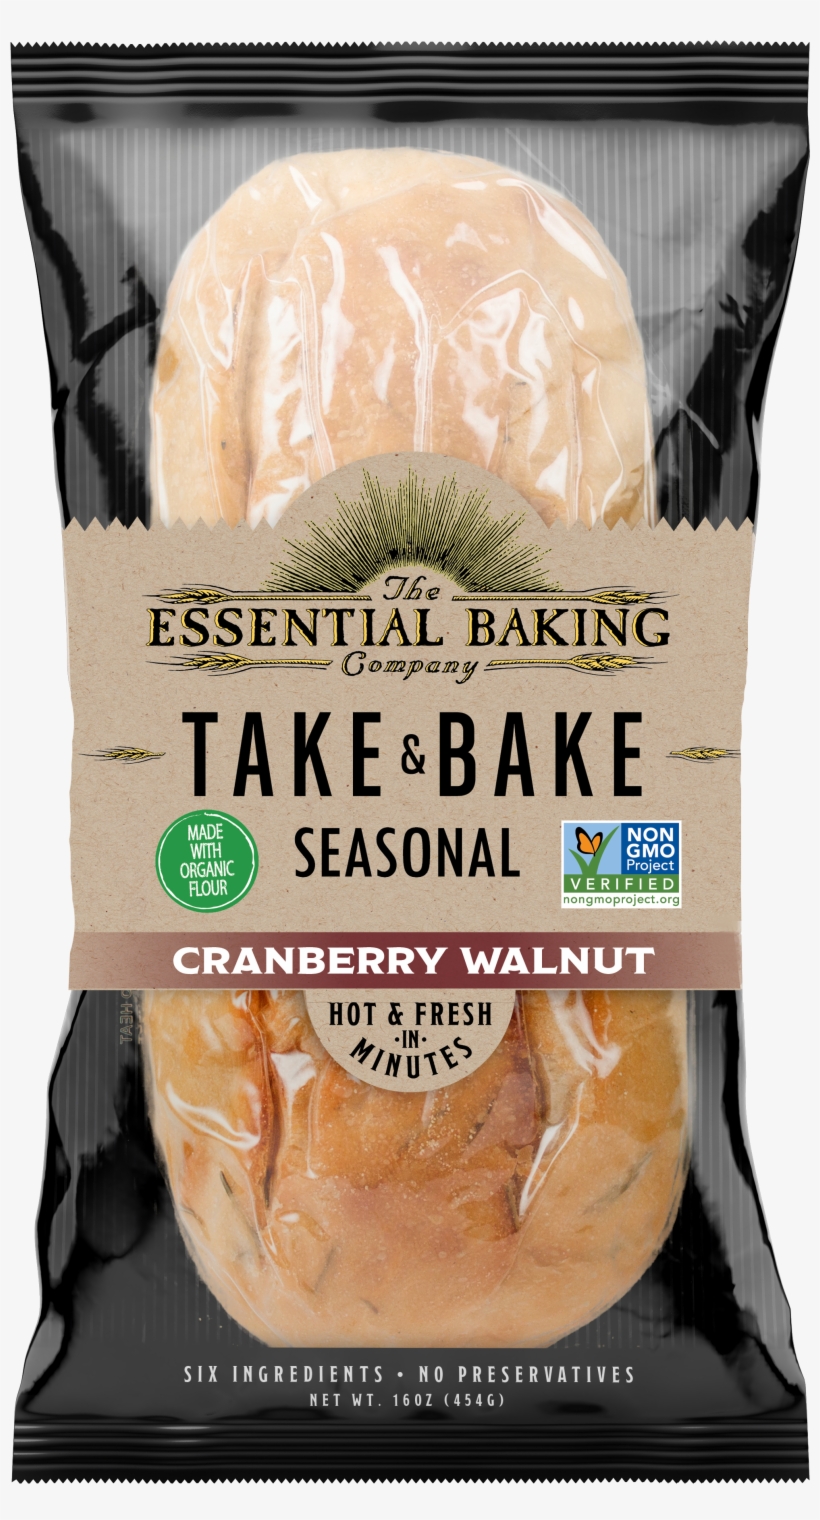 Take & Bake Cranberry Walnut Seasonal - Essential Baking, transparent png #1072541